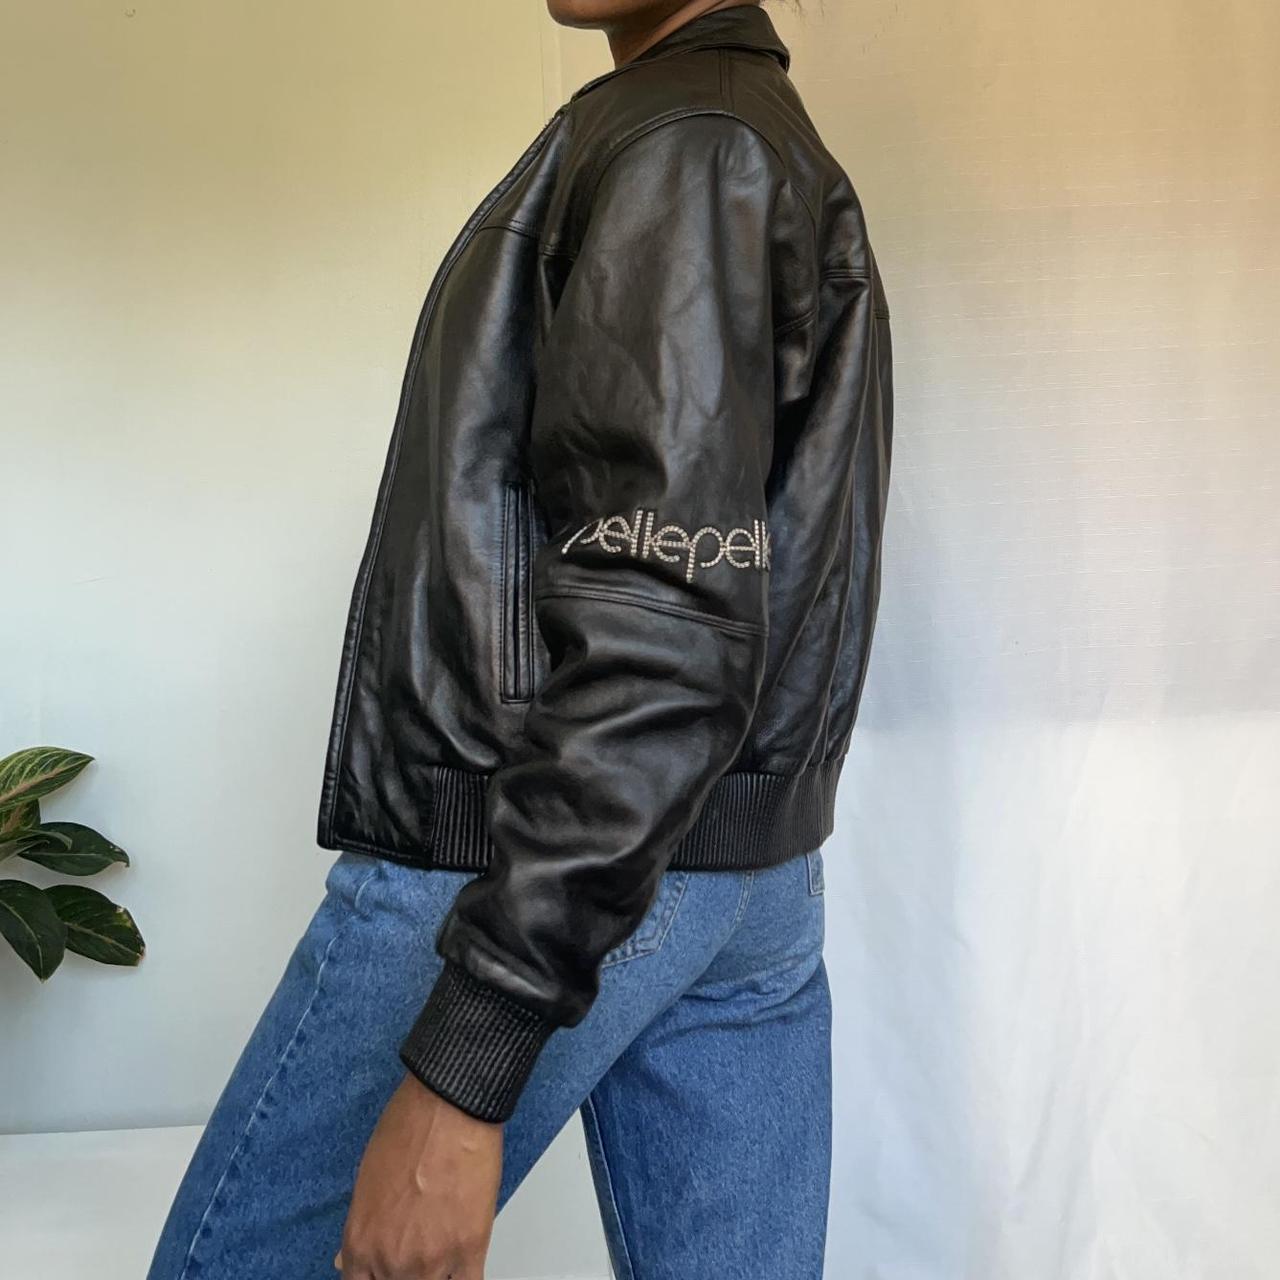 Product Image 3 - Vintage pellepelle black leather jacket
Size: